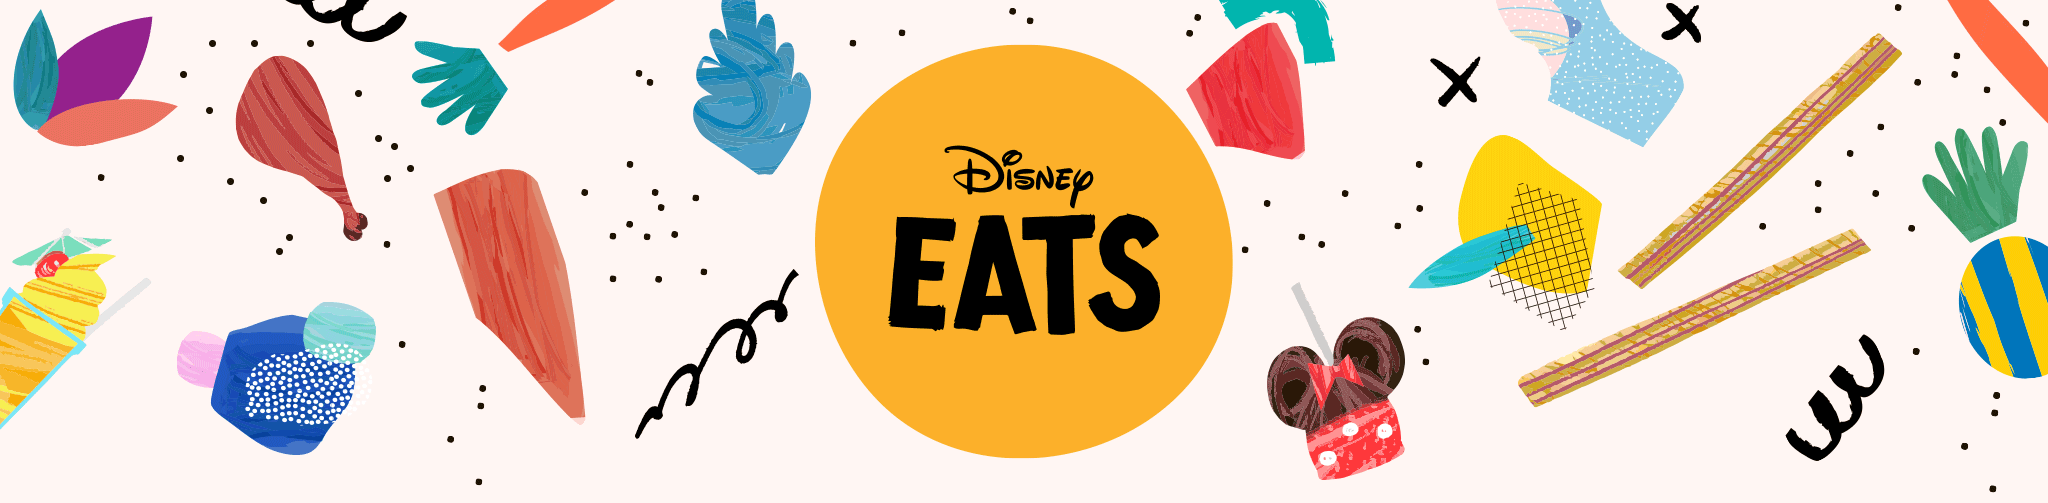 Disney Eats - Celebrate Food with a Dash of Disney Magic